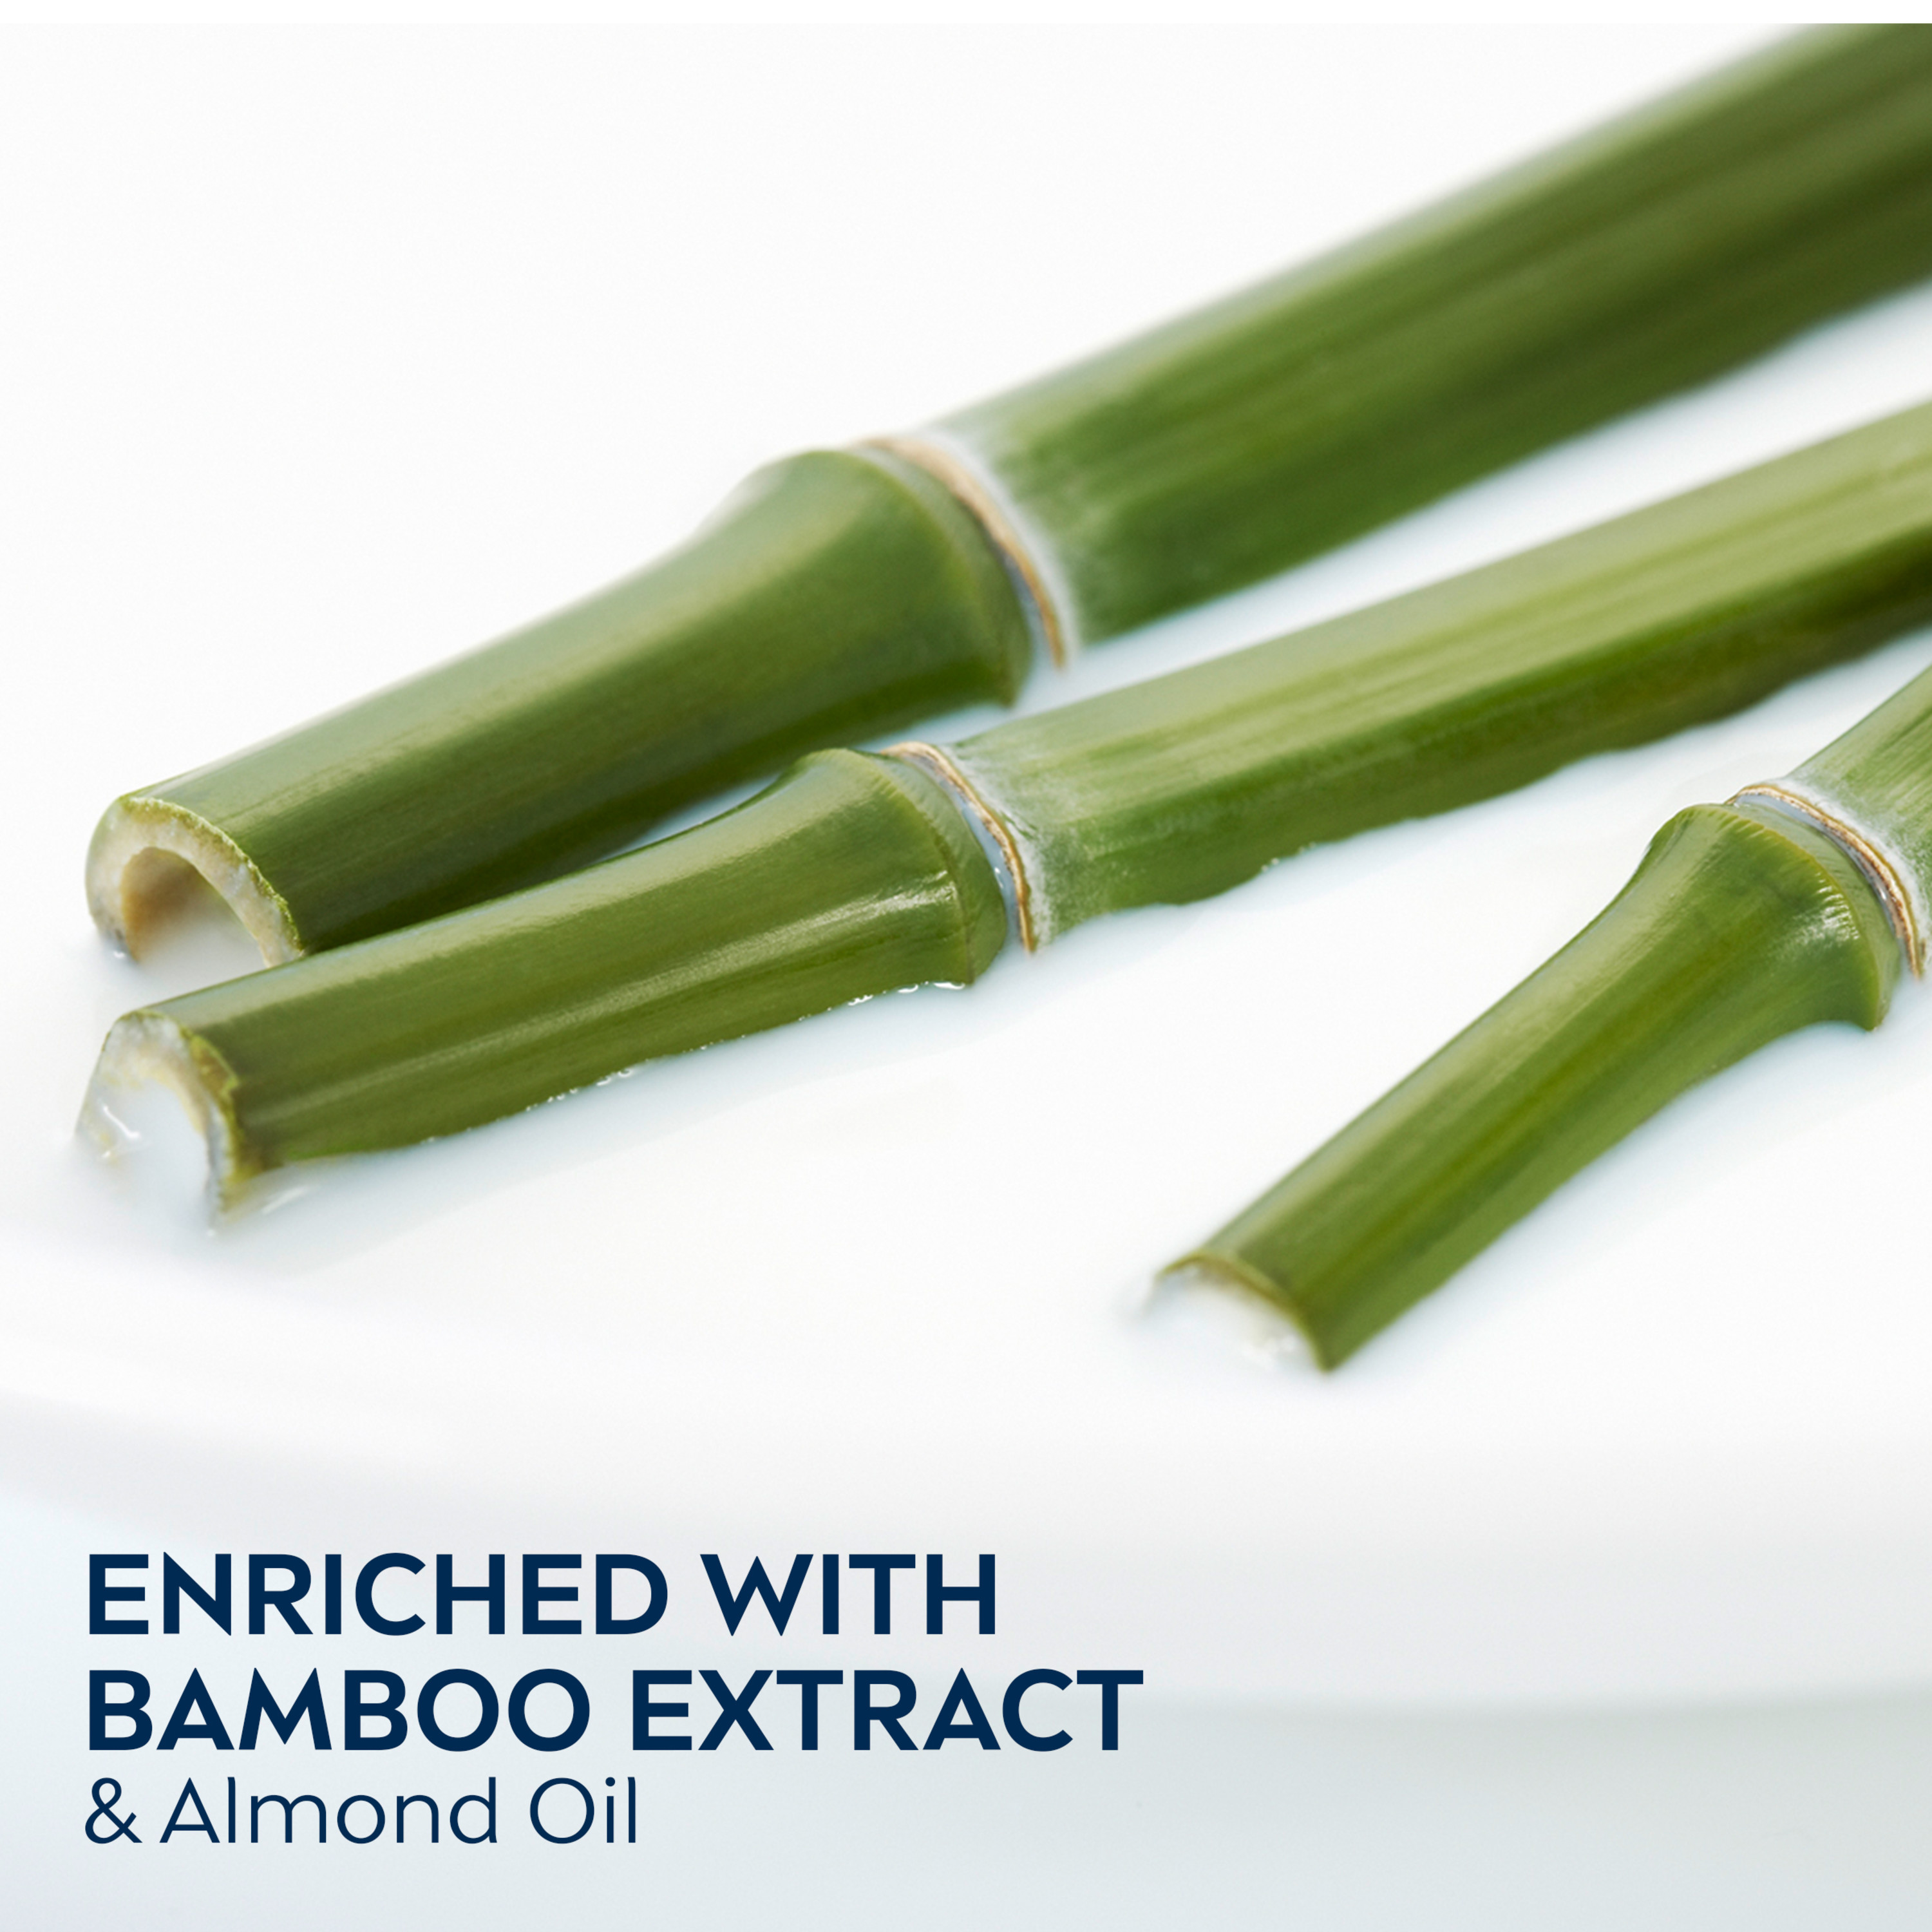 NIVEA MEN Sensitive Body Wash with Bamboo Extract, 16.9 Fl Oz Bottle - image 7 of 13